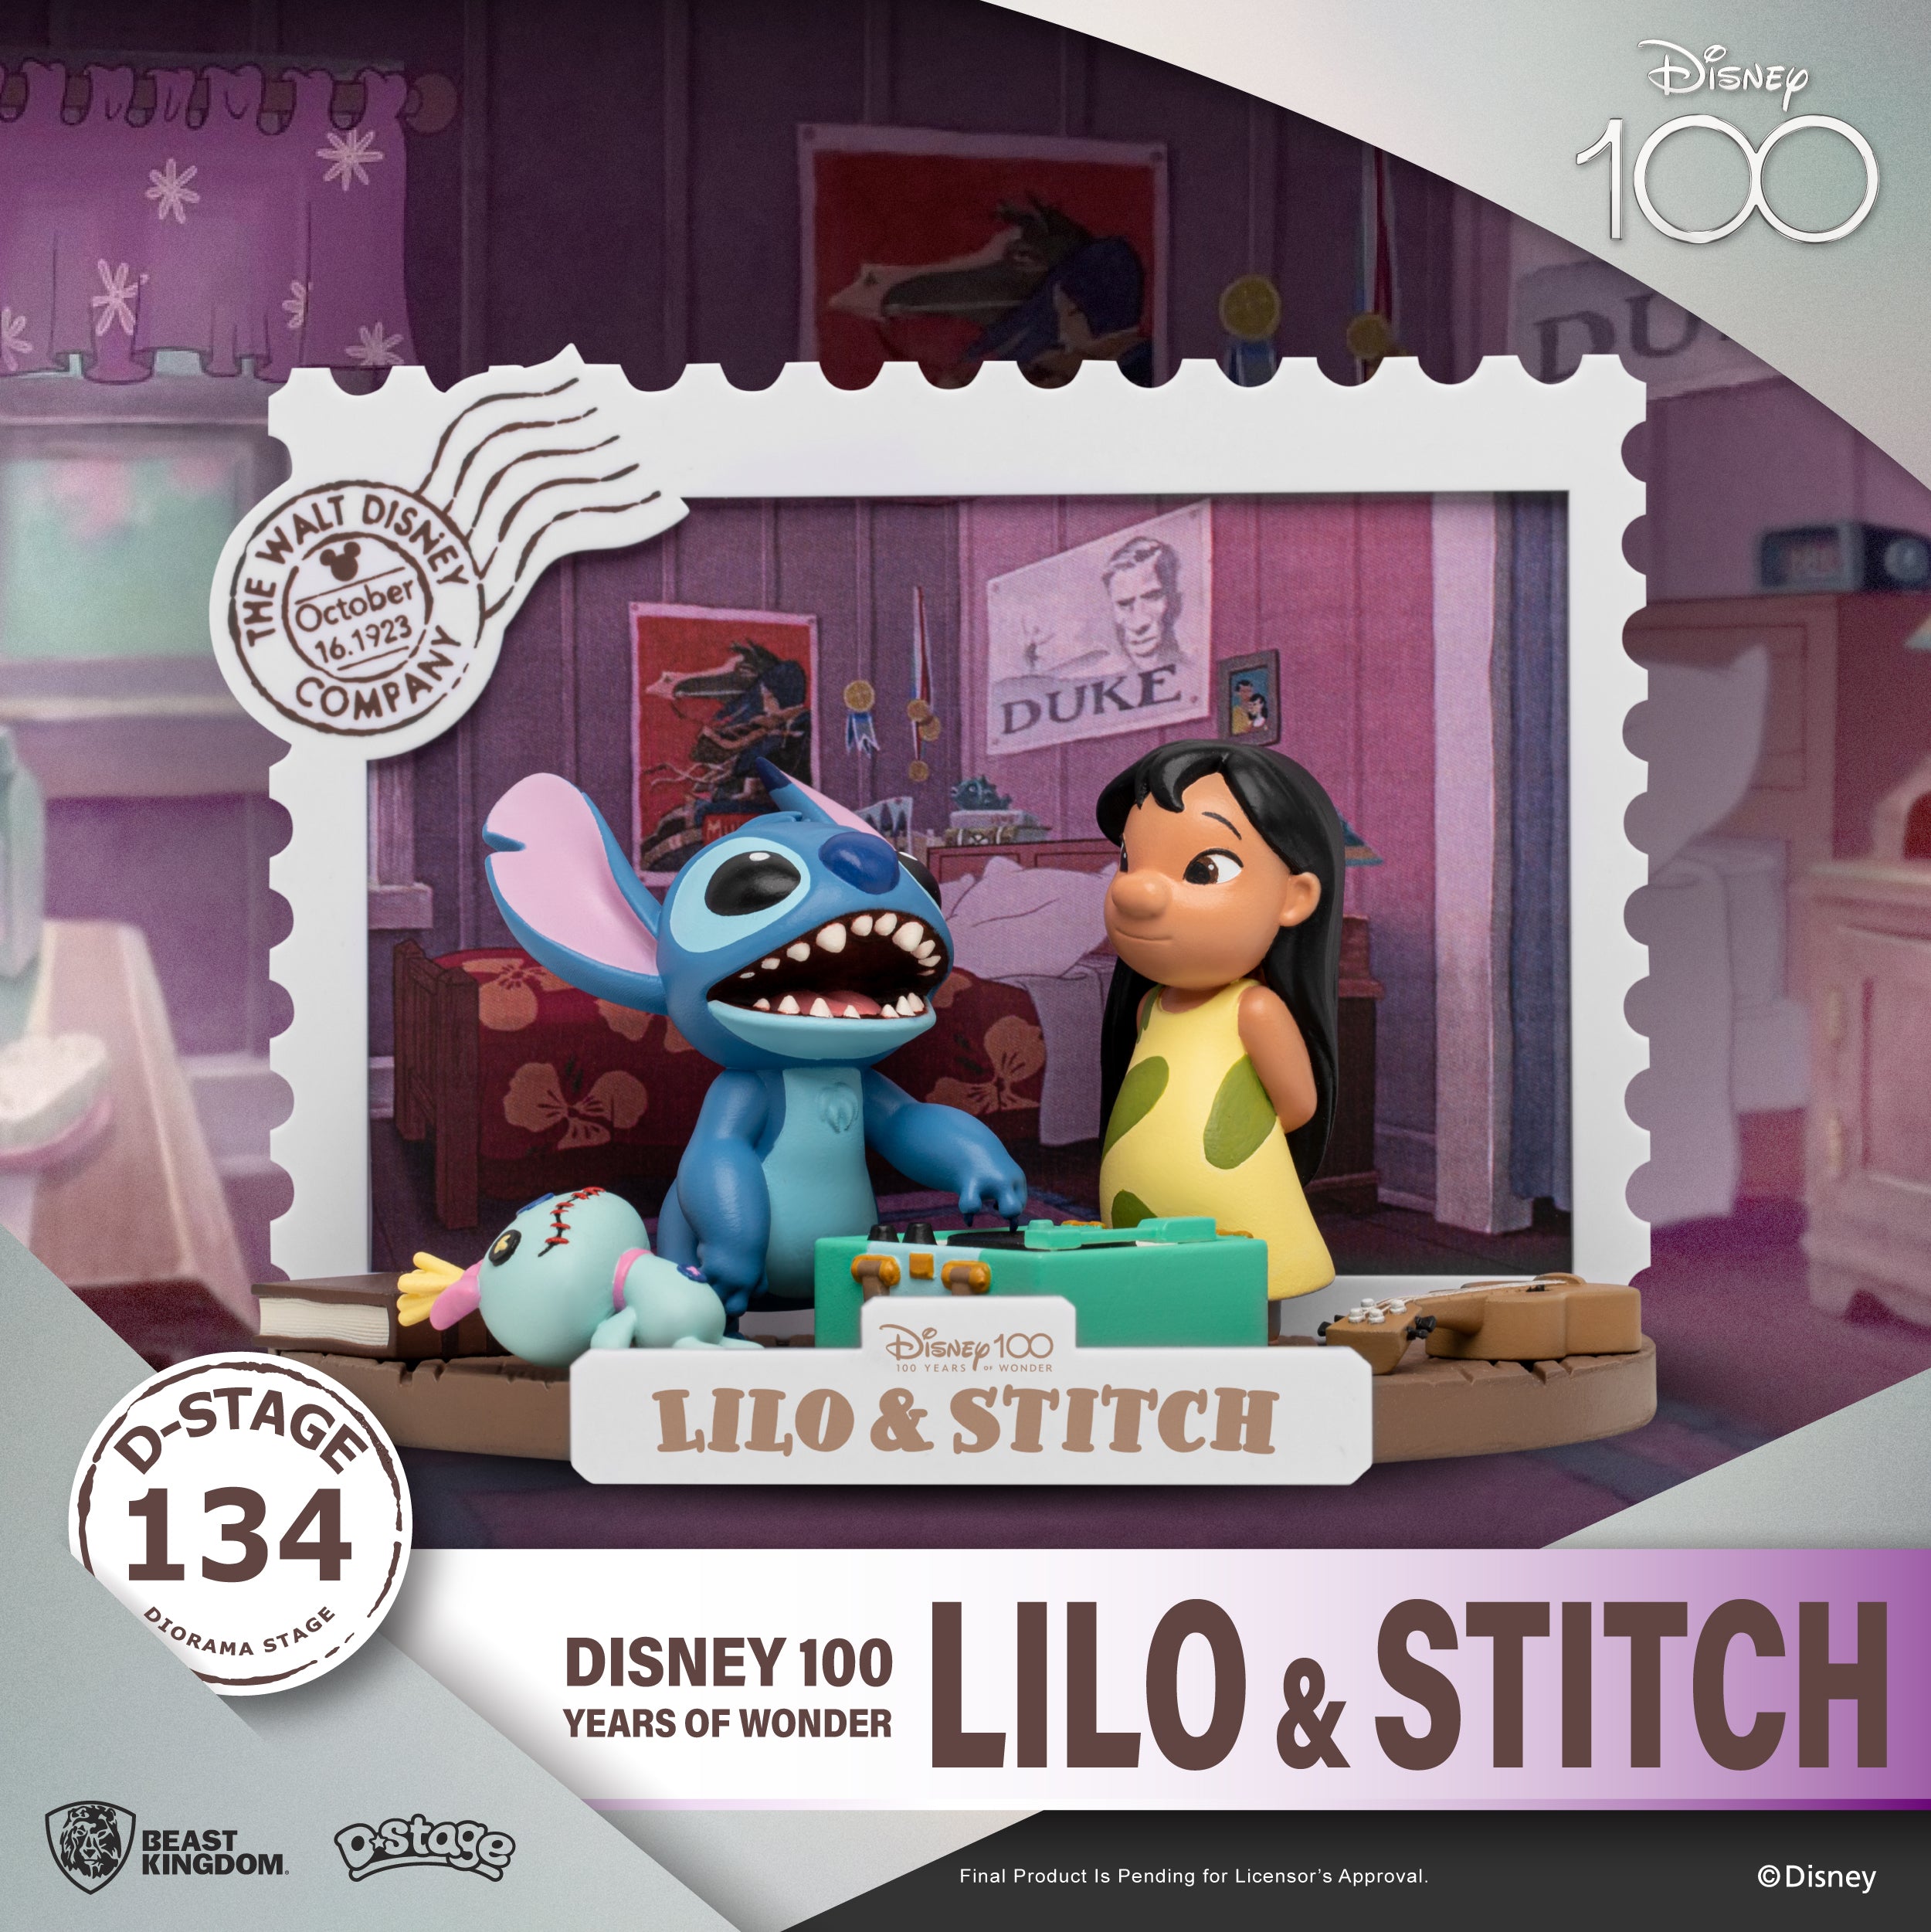 Statuette Disney collection Lilo et Stitch